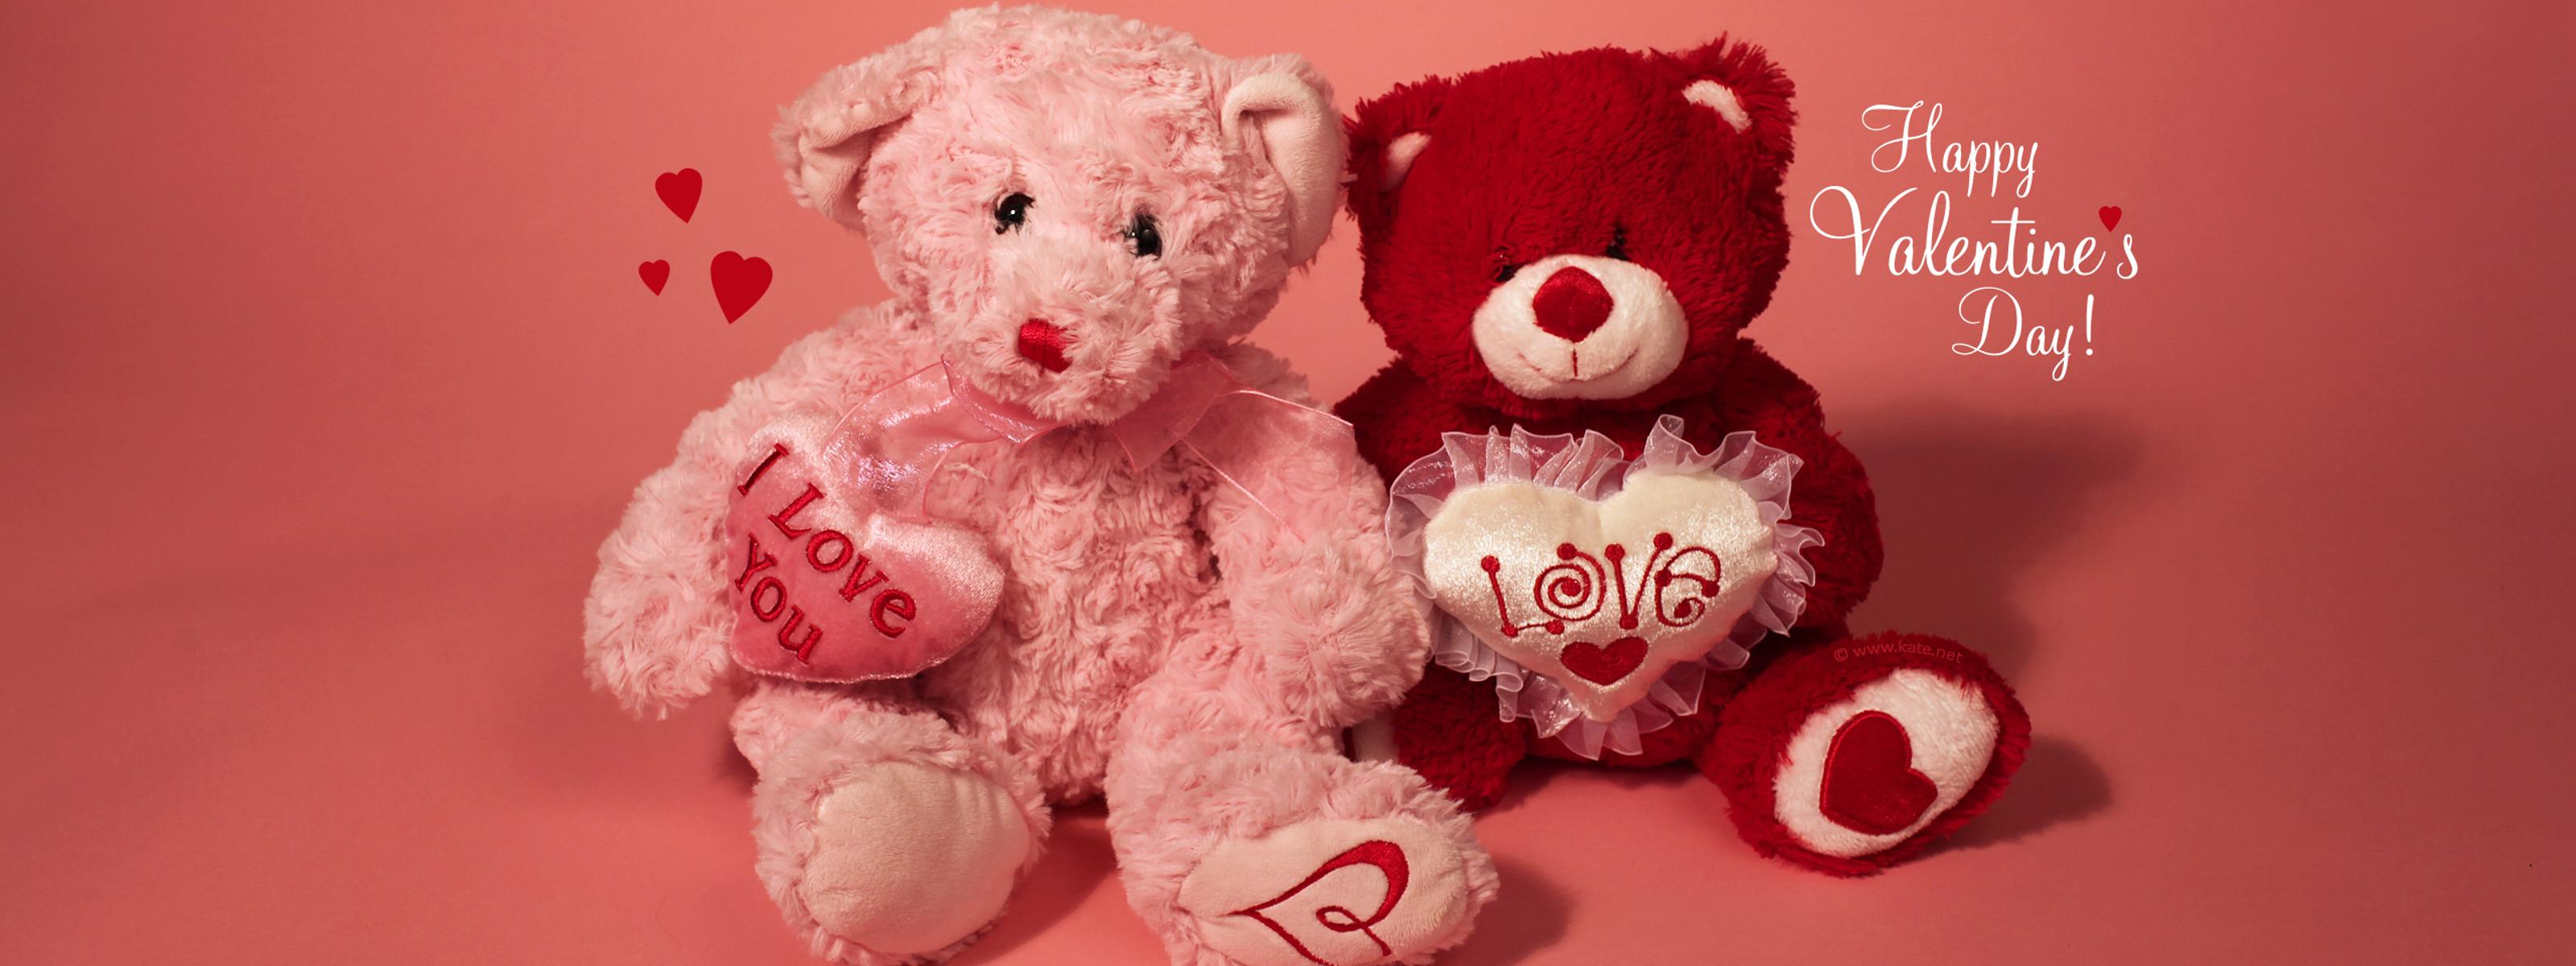 I love you my teddy bear Valentine's Day